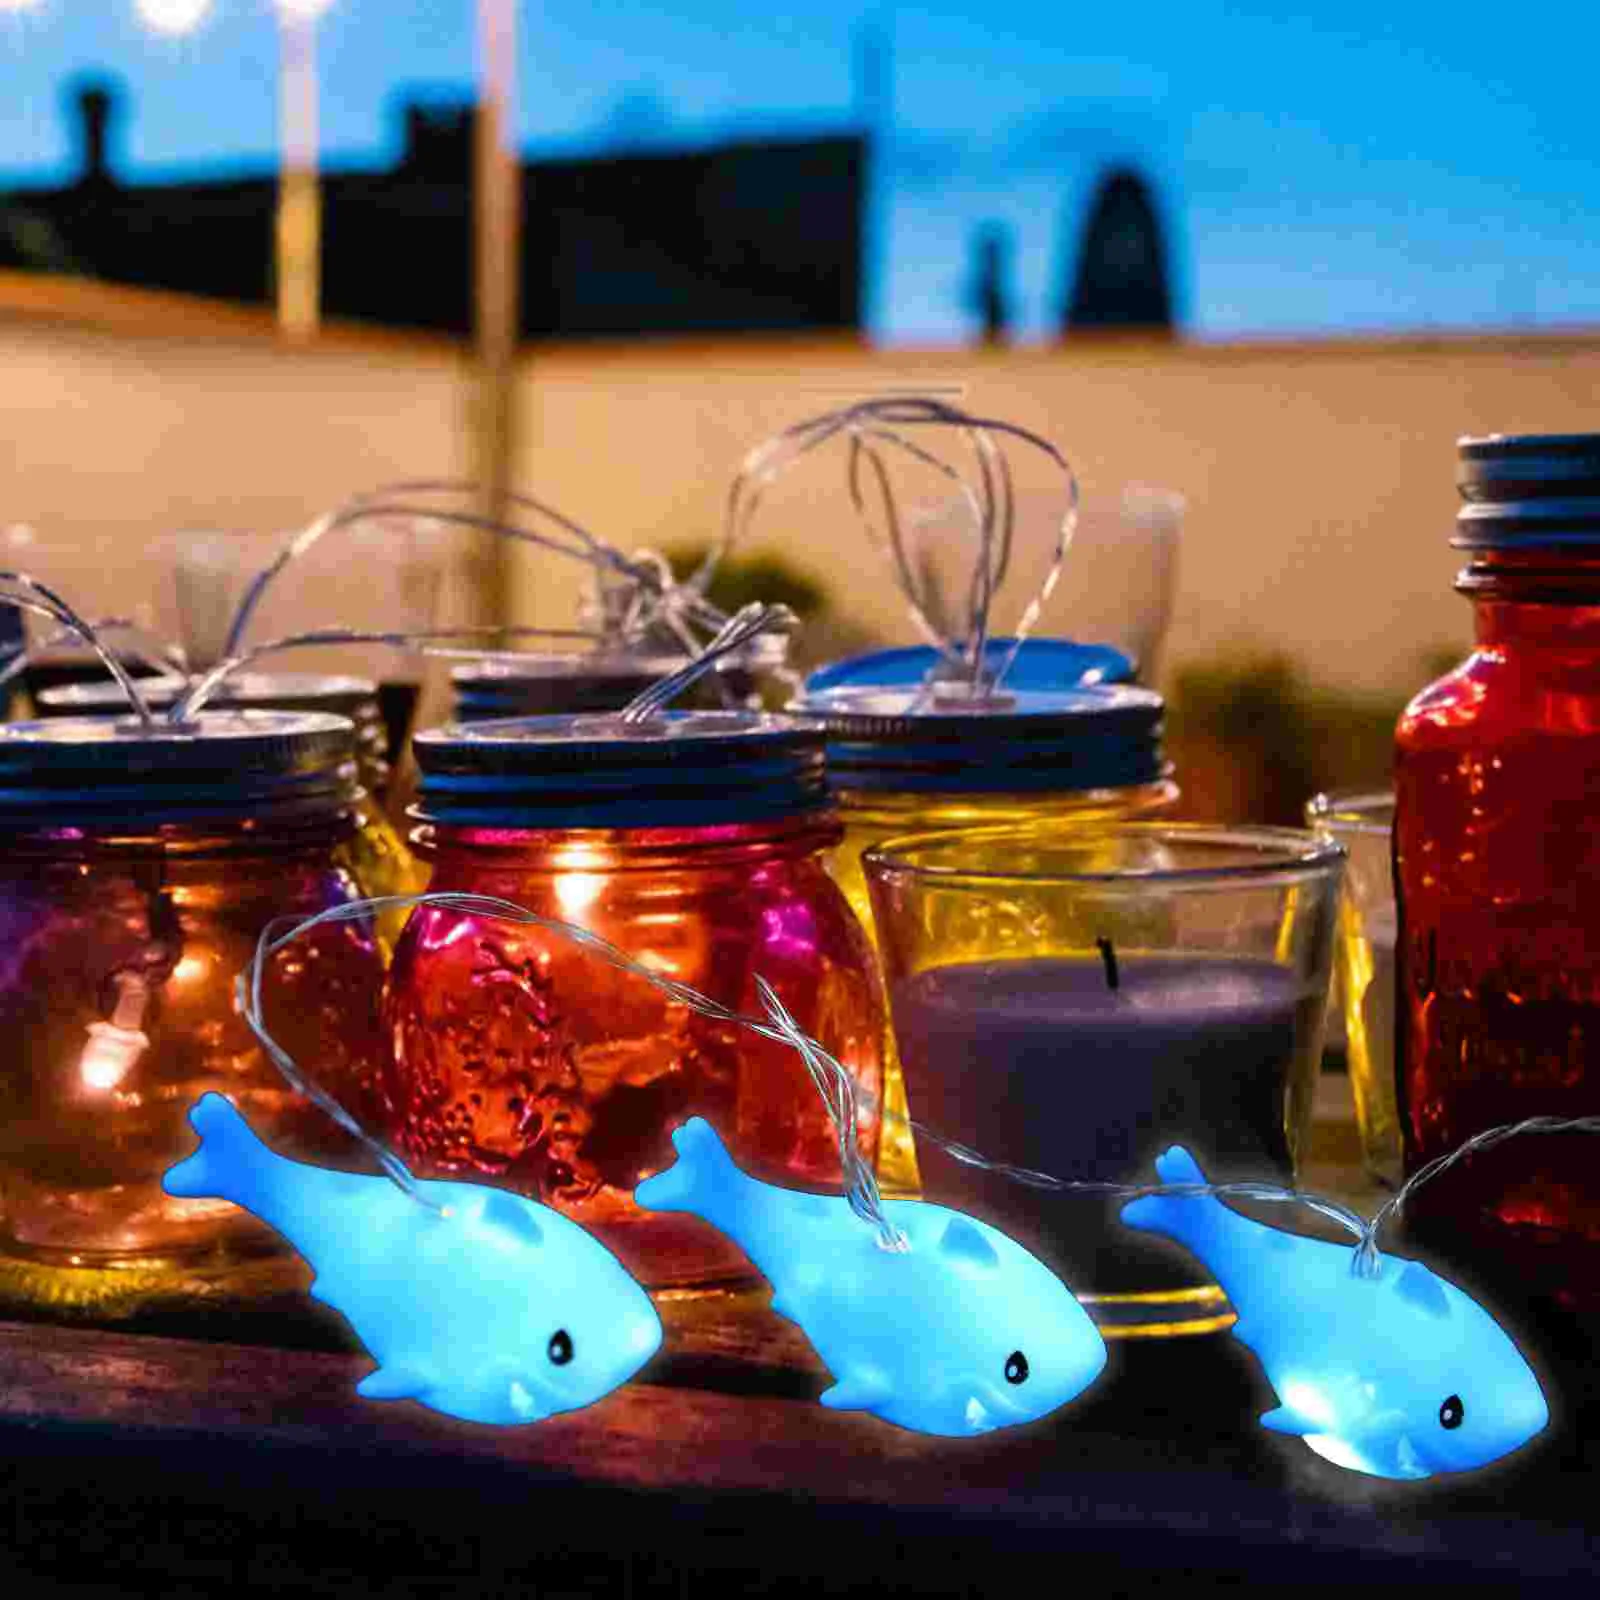 

Shark Light Home Decor Plastic Decors Children's Room Festival Decoration Present Party Layout Prop Adorn